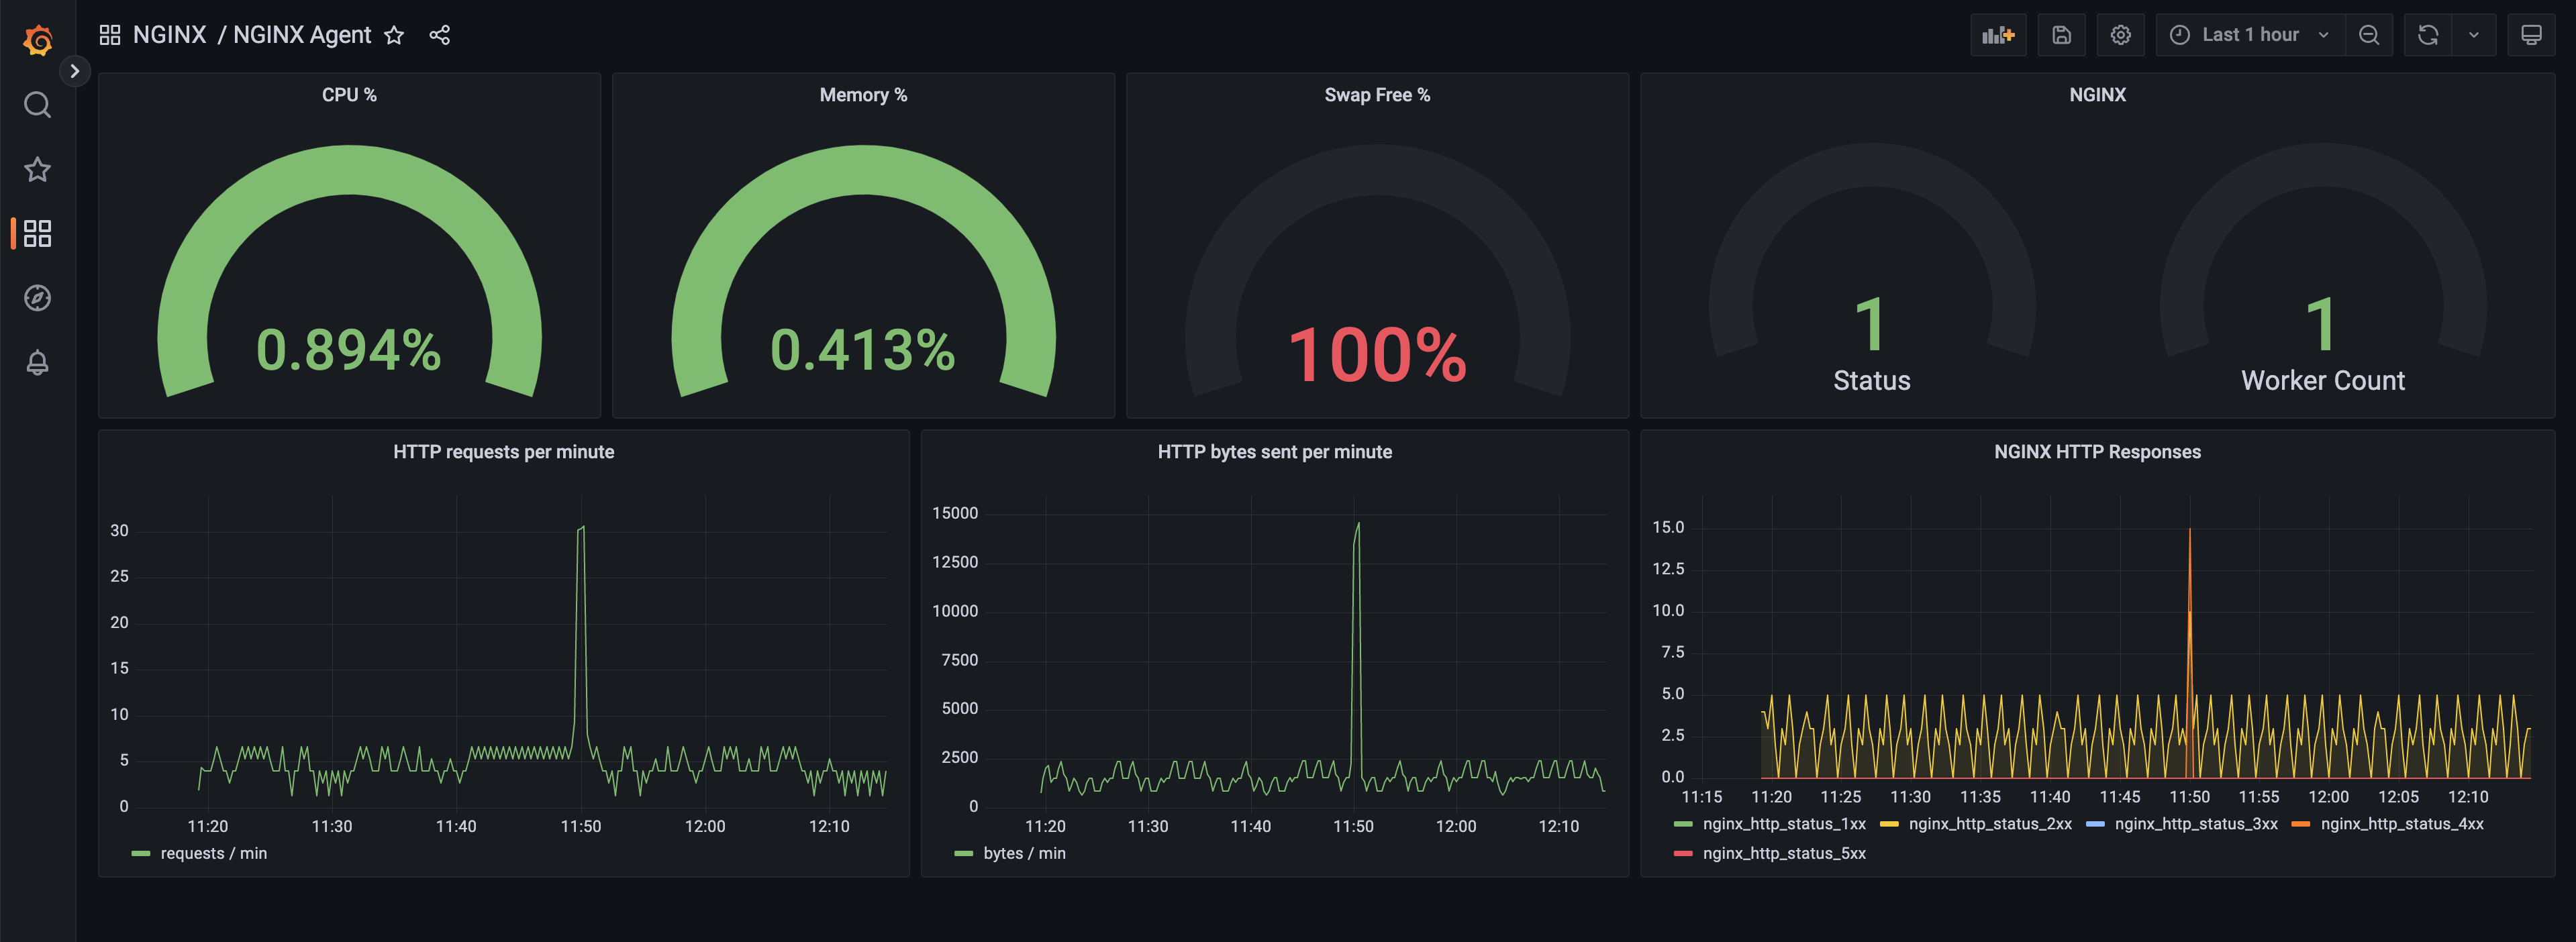 Grafana dashboard showing NGINX Agent reported metrics